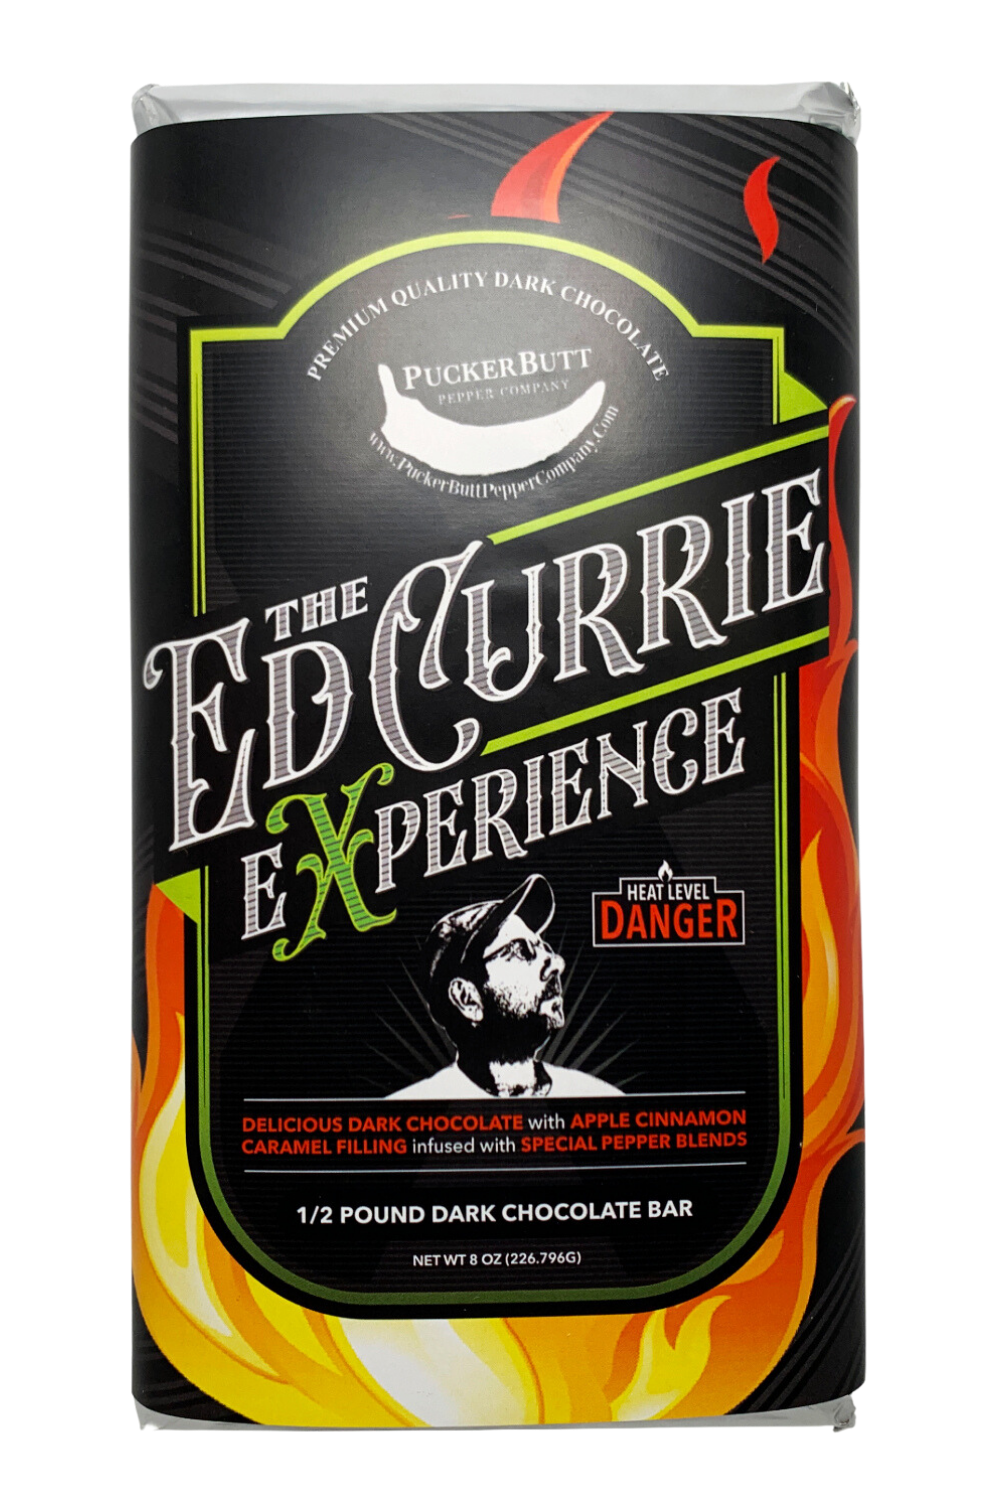 The Ed Curries eXperience Dark Chocolate Bar